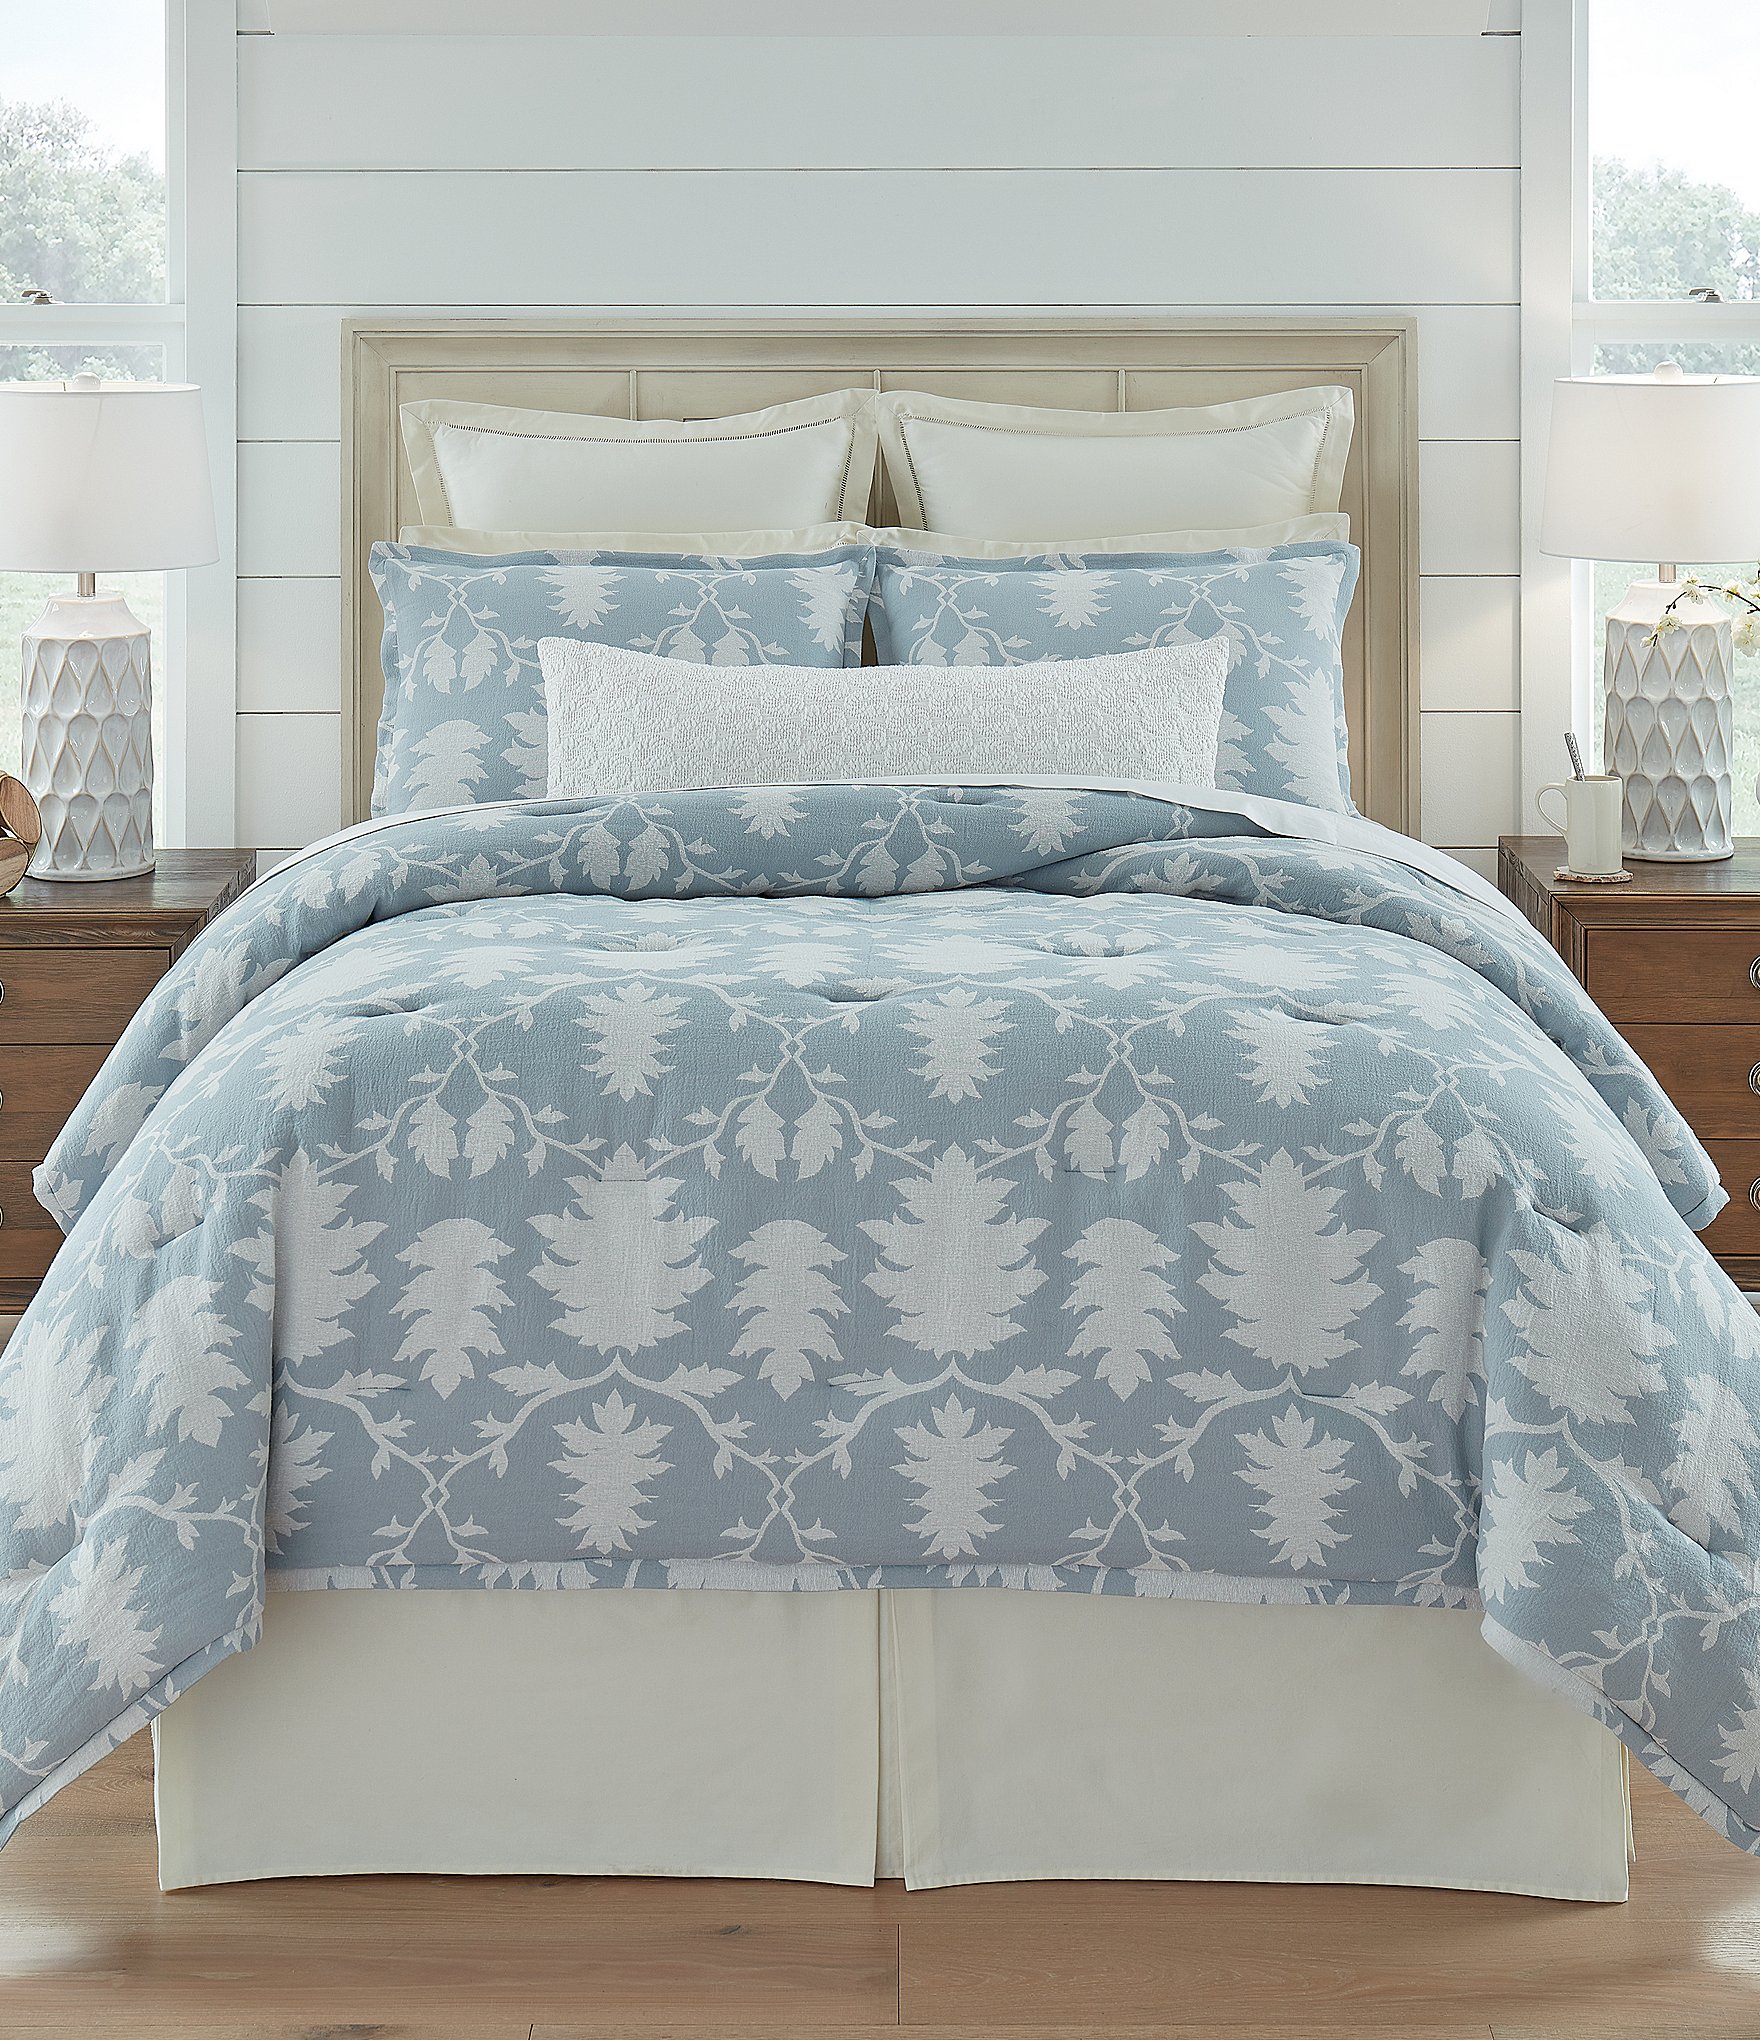 southern living comforter: Comforters & Down Comforters